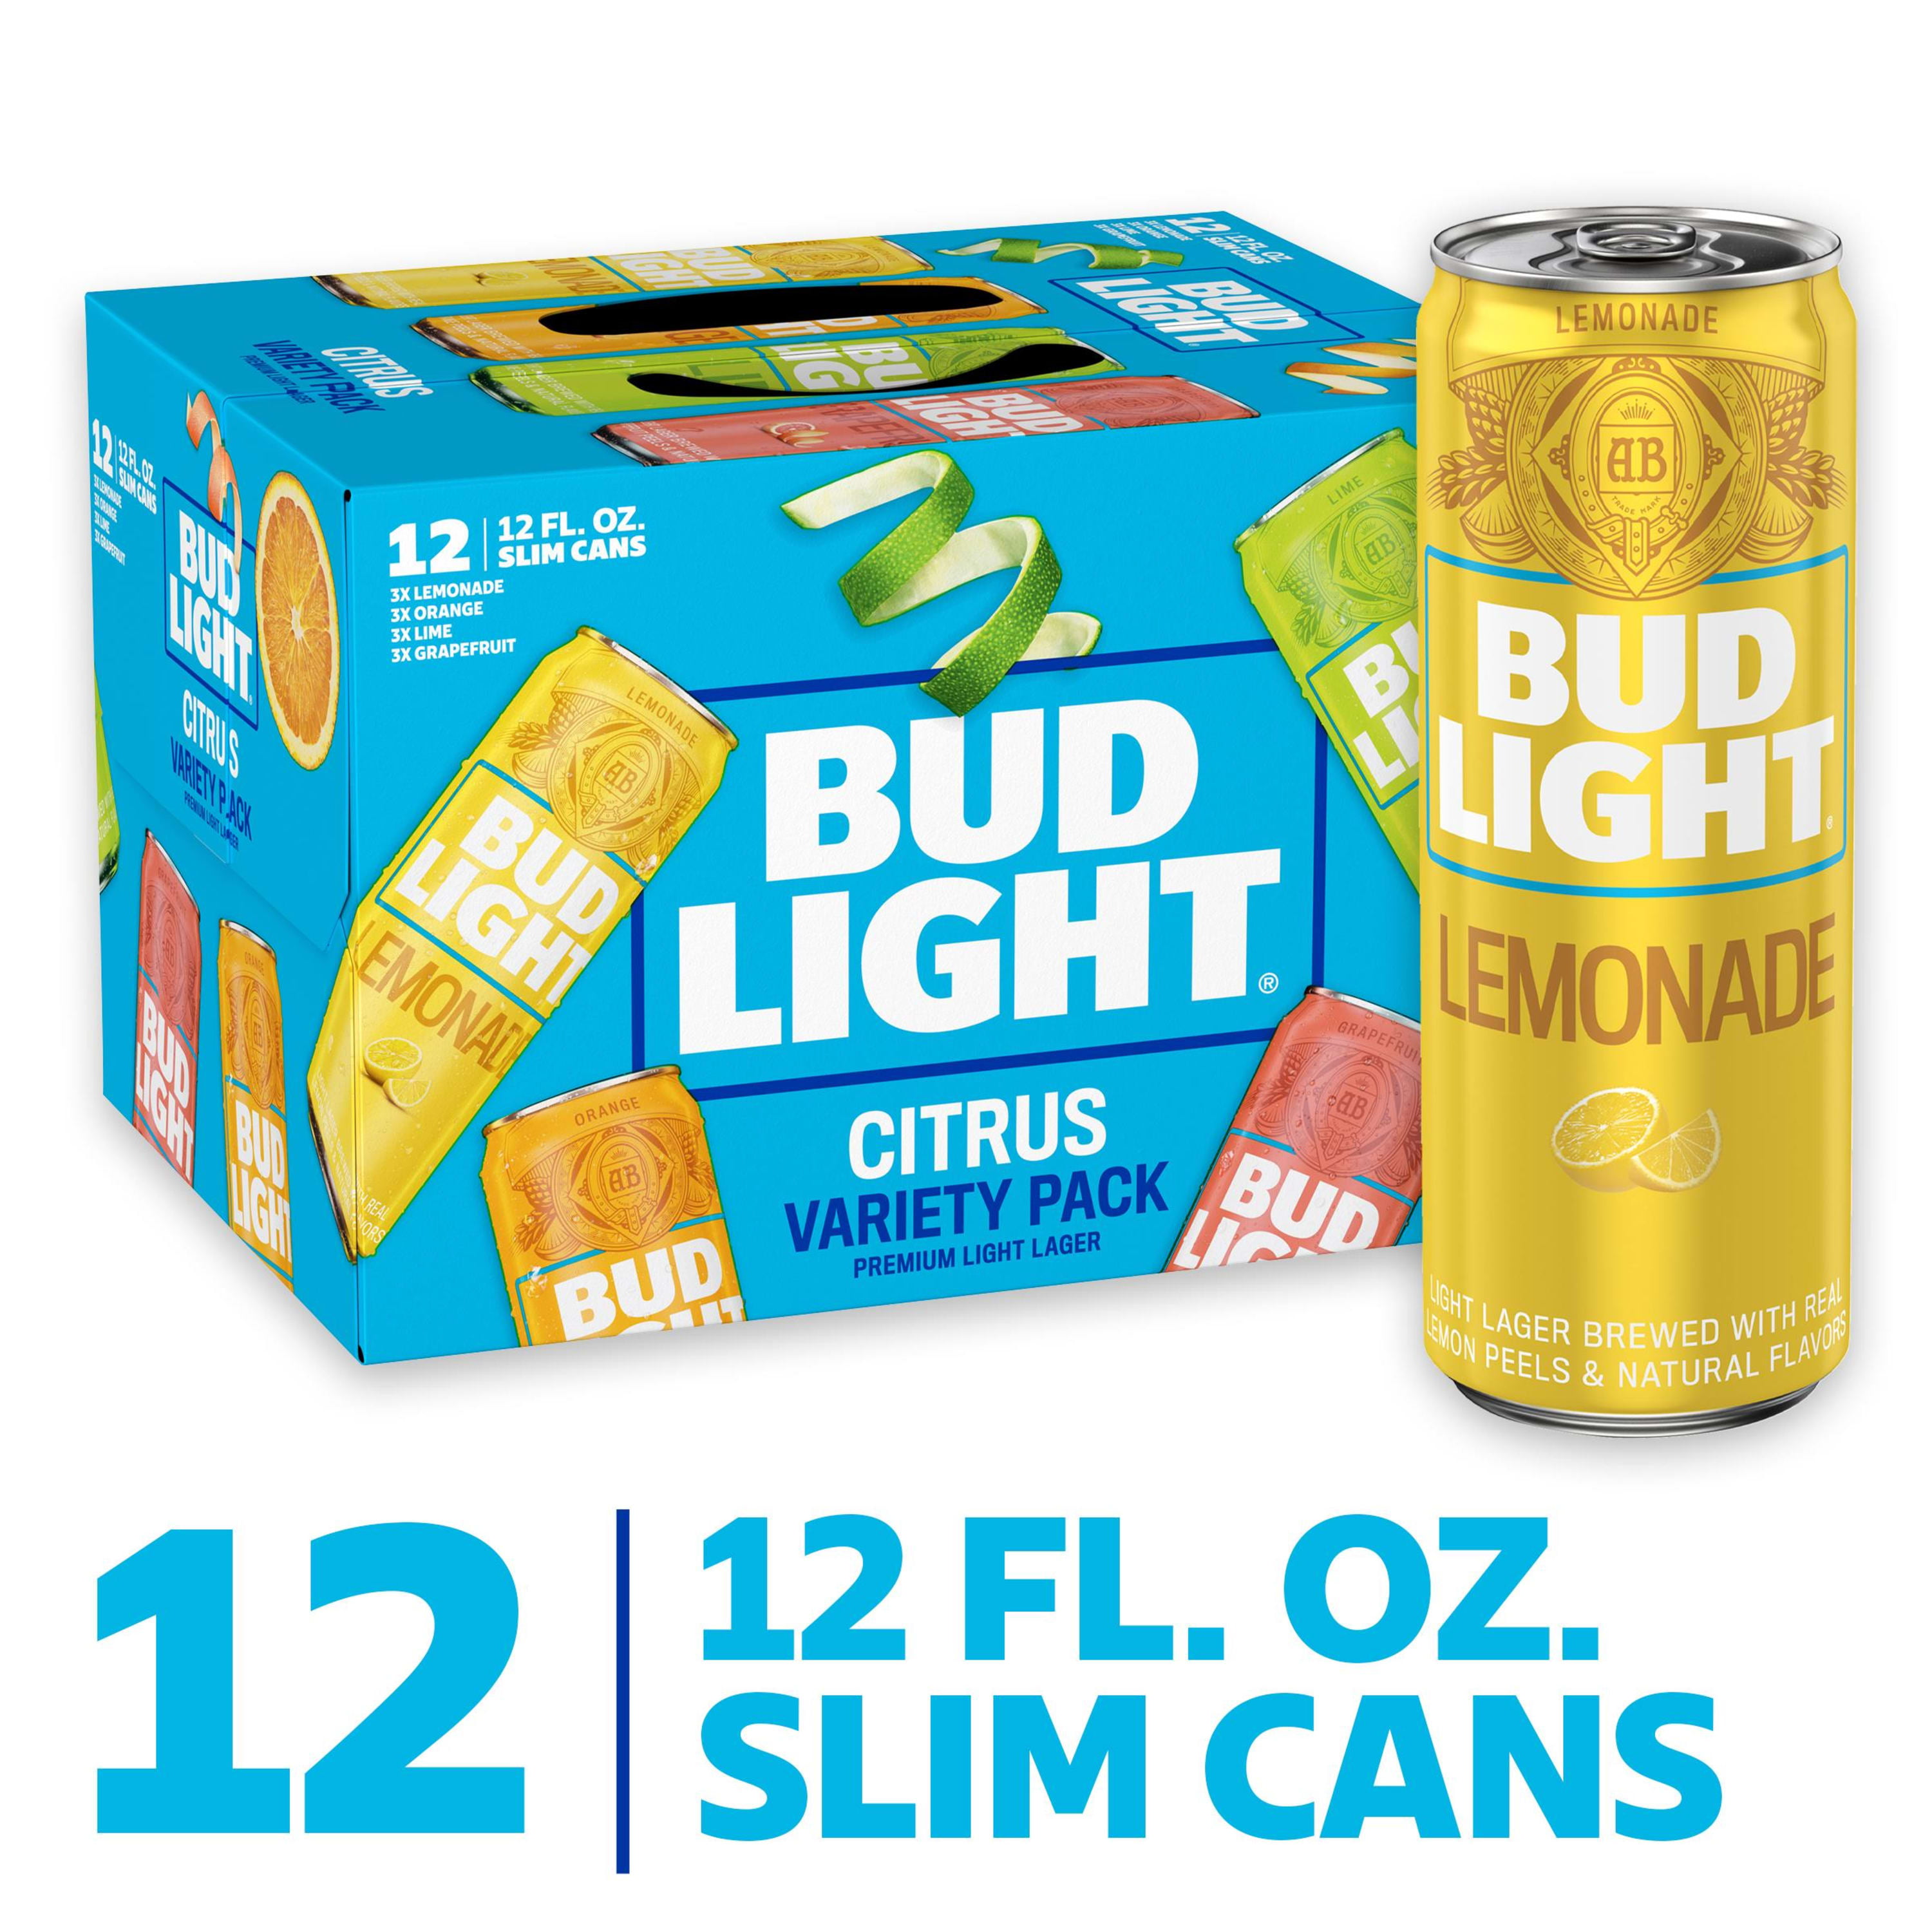 Bud Light Lime Lemonade Orange Beer Variety Pack 12 Pack Beer 12 Fl Oz Cans Walmart Com